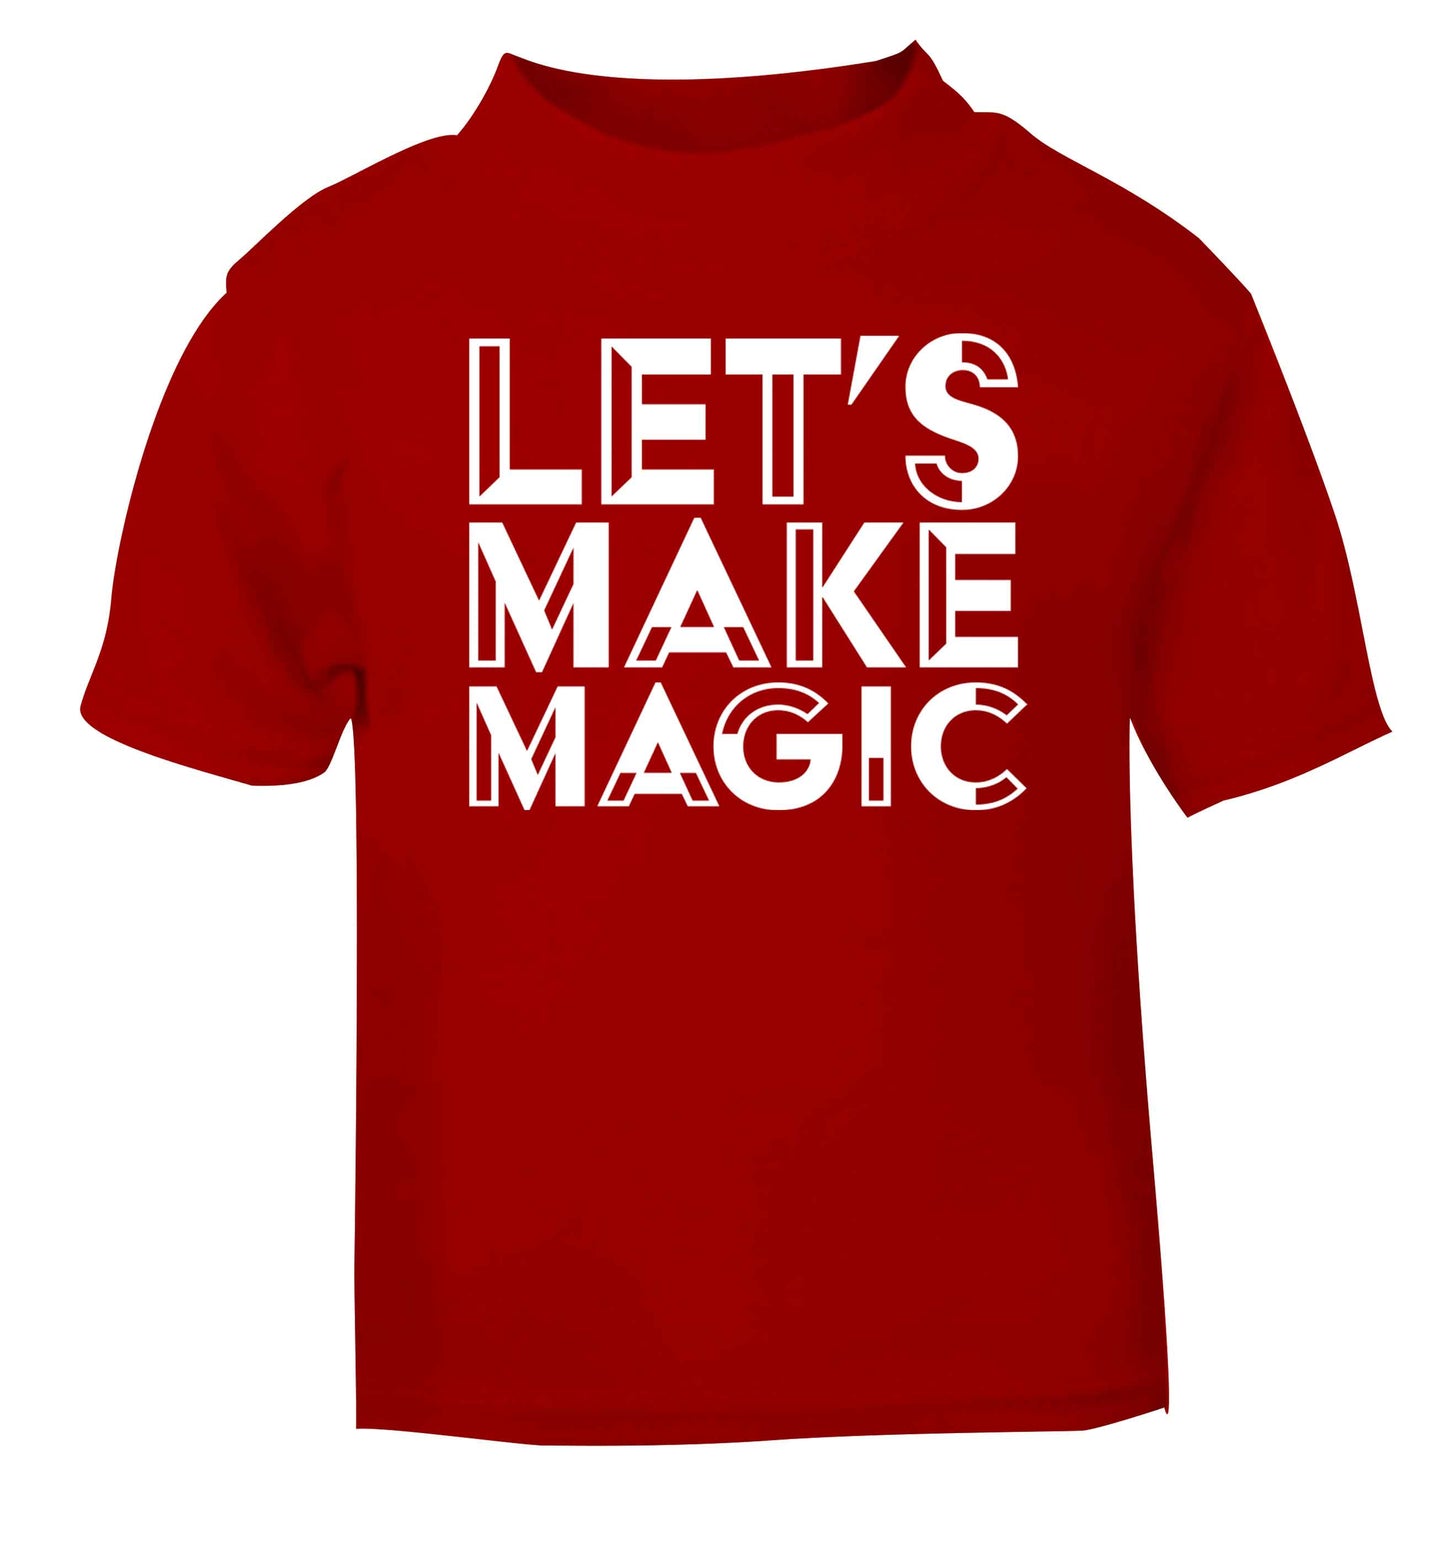 Let's make magic red baby toddler Tshirt 2 Years